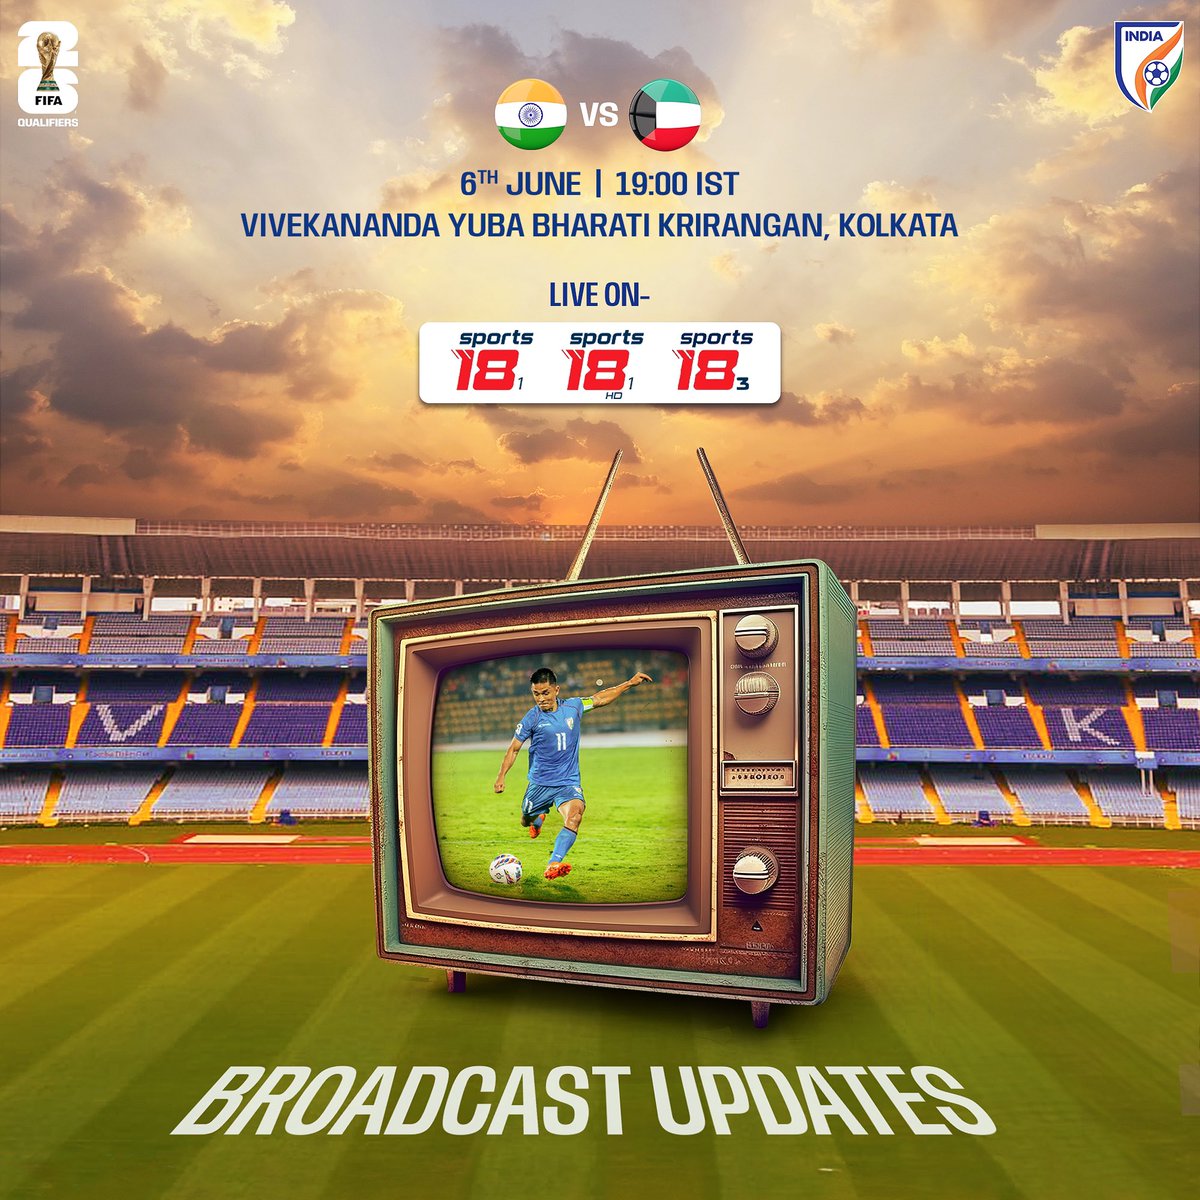 𝗕𝗿𝗼𝗮𝗱𝗰𝗮𝘀𝘁 𝗨𝗽𝗱𝗮𝘁𝗲 ‼️

#ThankYouSC11 #FIFAWorldCup 🏆 #BlueTigers 🐯 #IndianFootball ⚽️